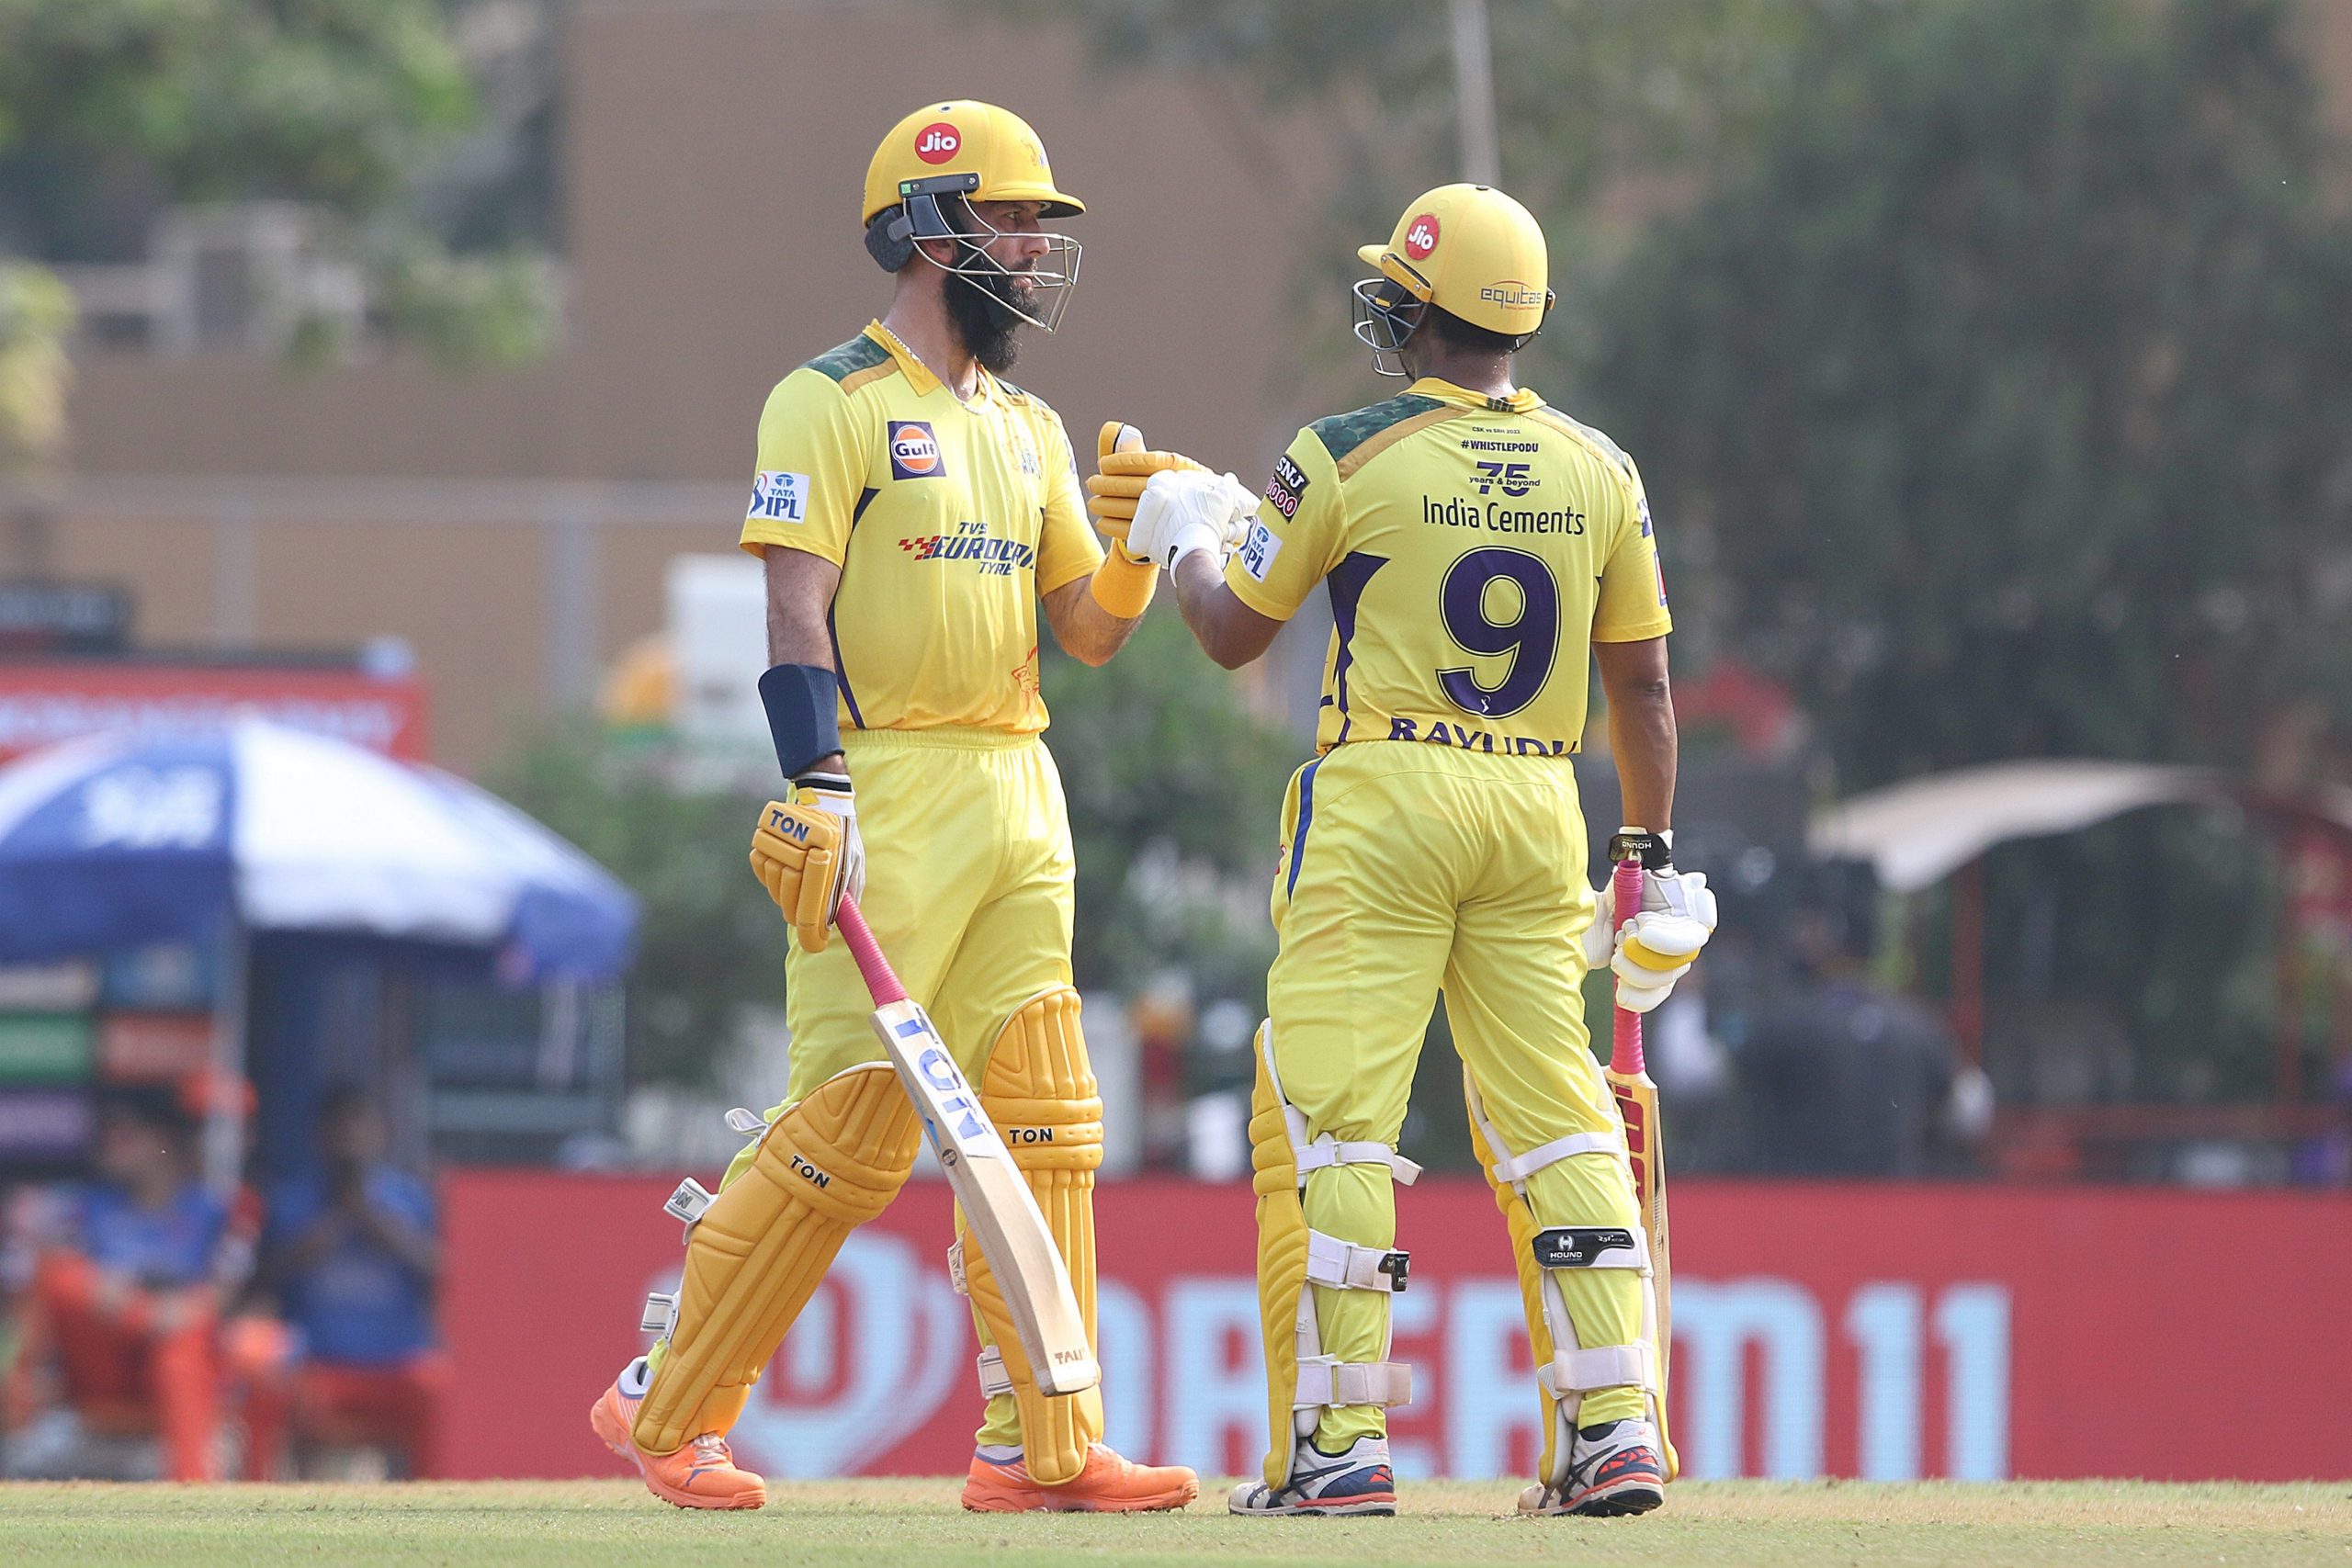 IPL 2022: Sunrisers Hyderabad hand Chennai Super Kings their 4th consecutive loss